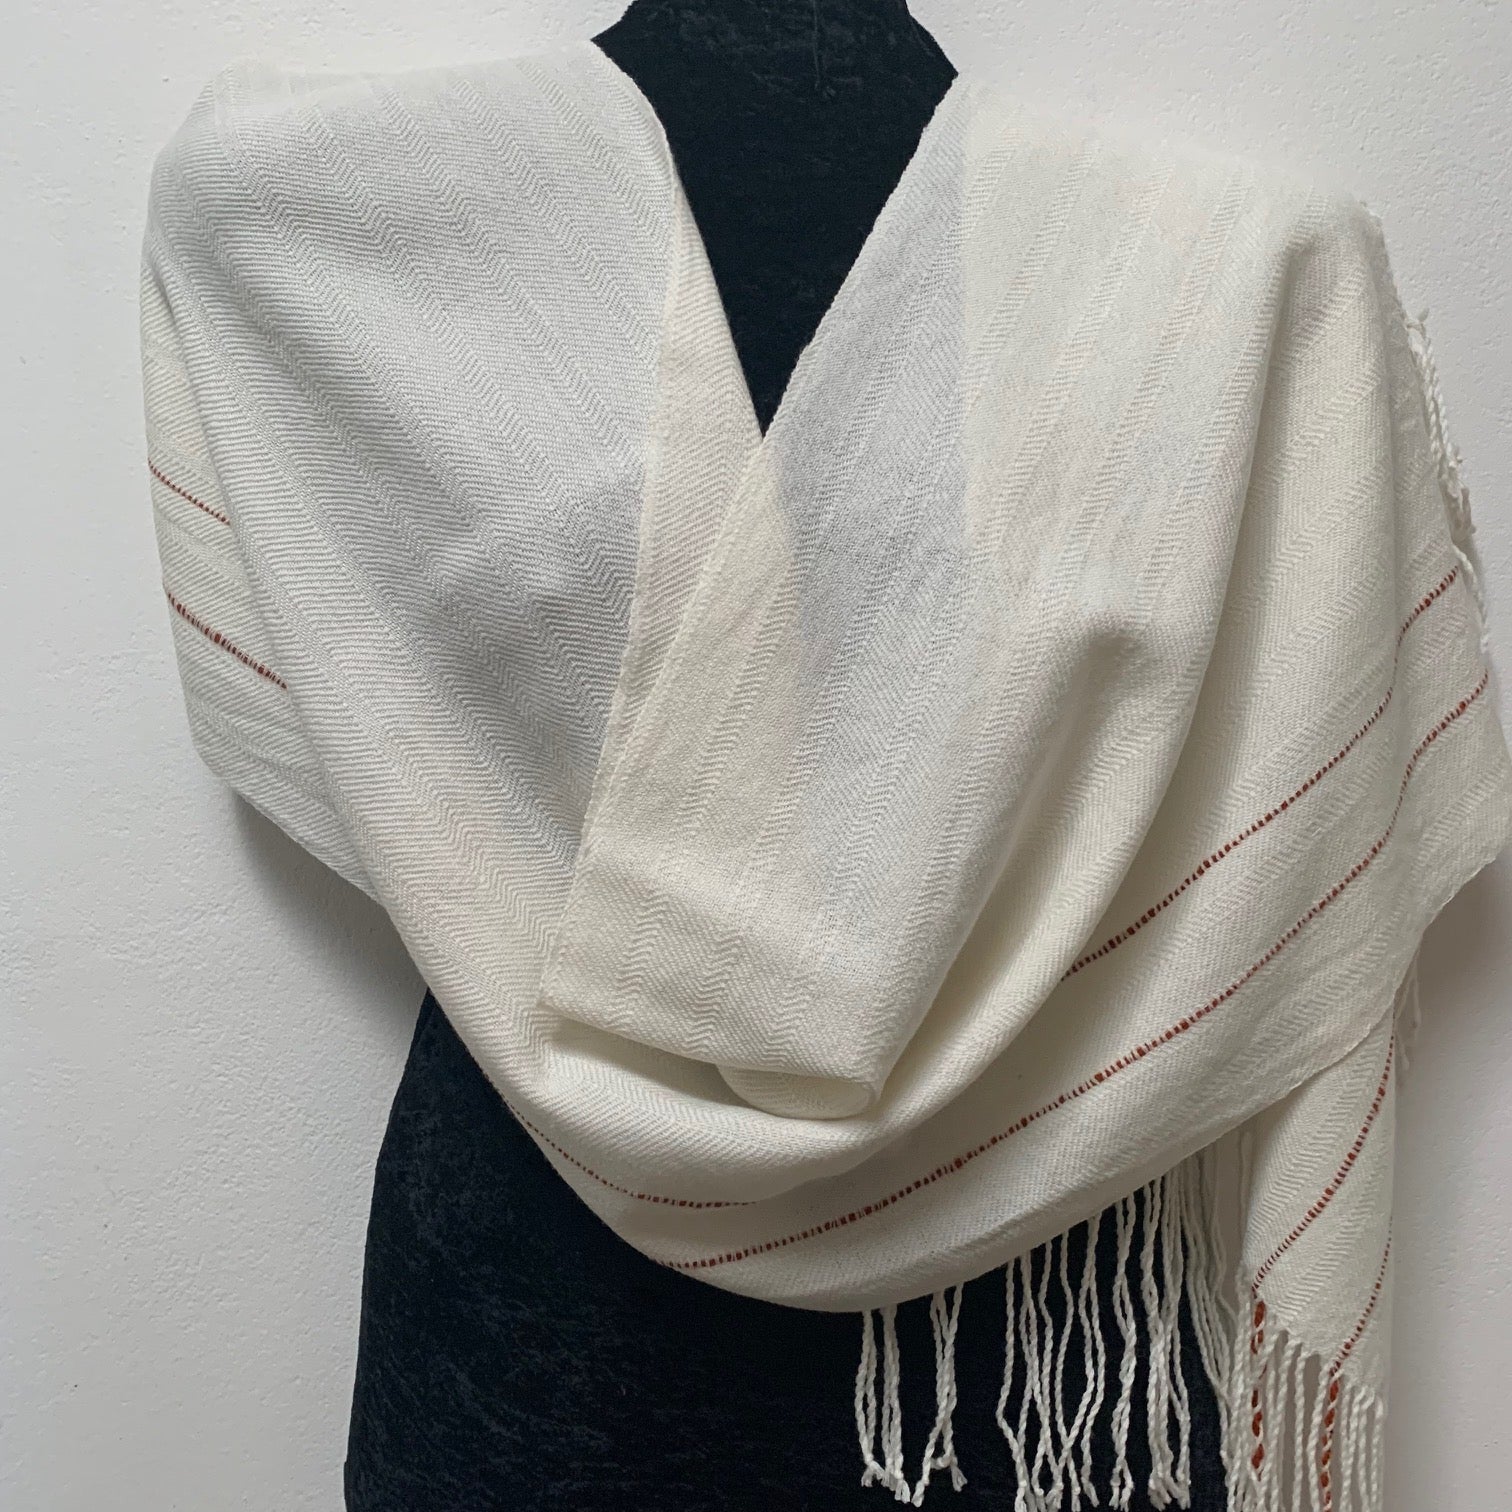 Handwoven scarf in wool by Helen Wilder